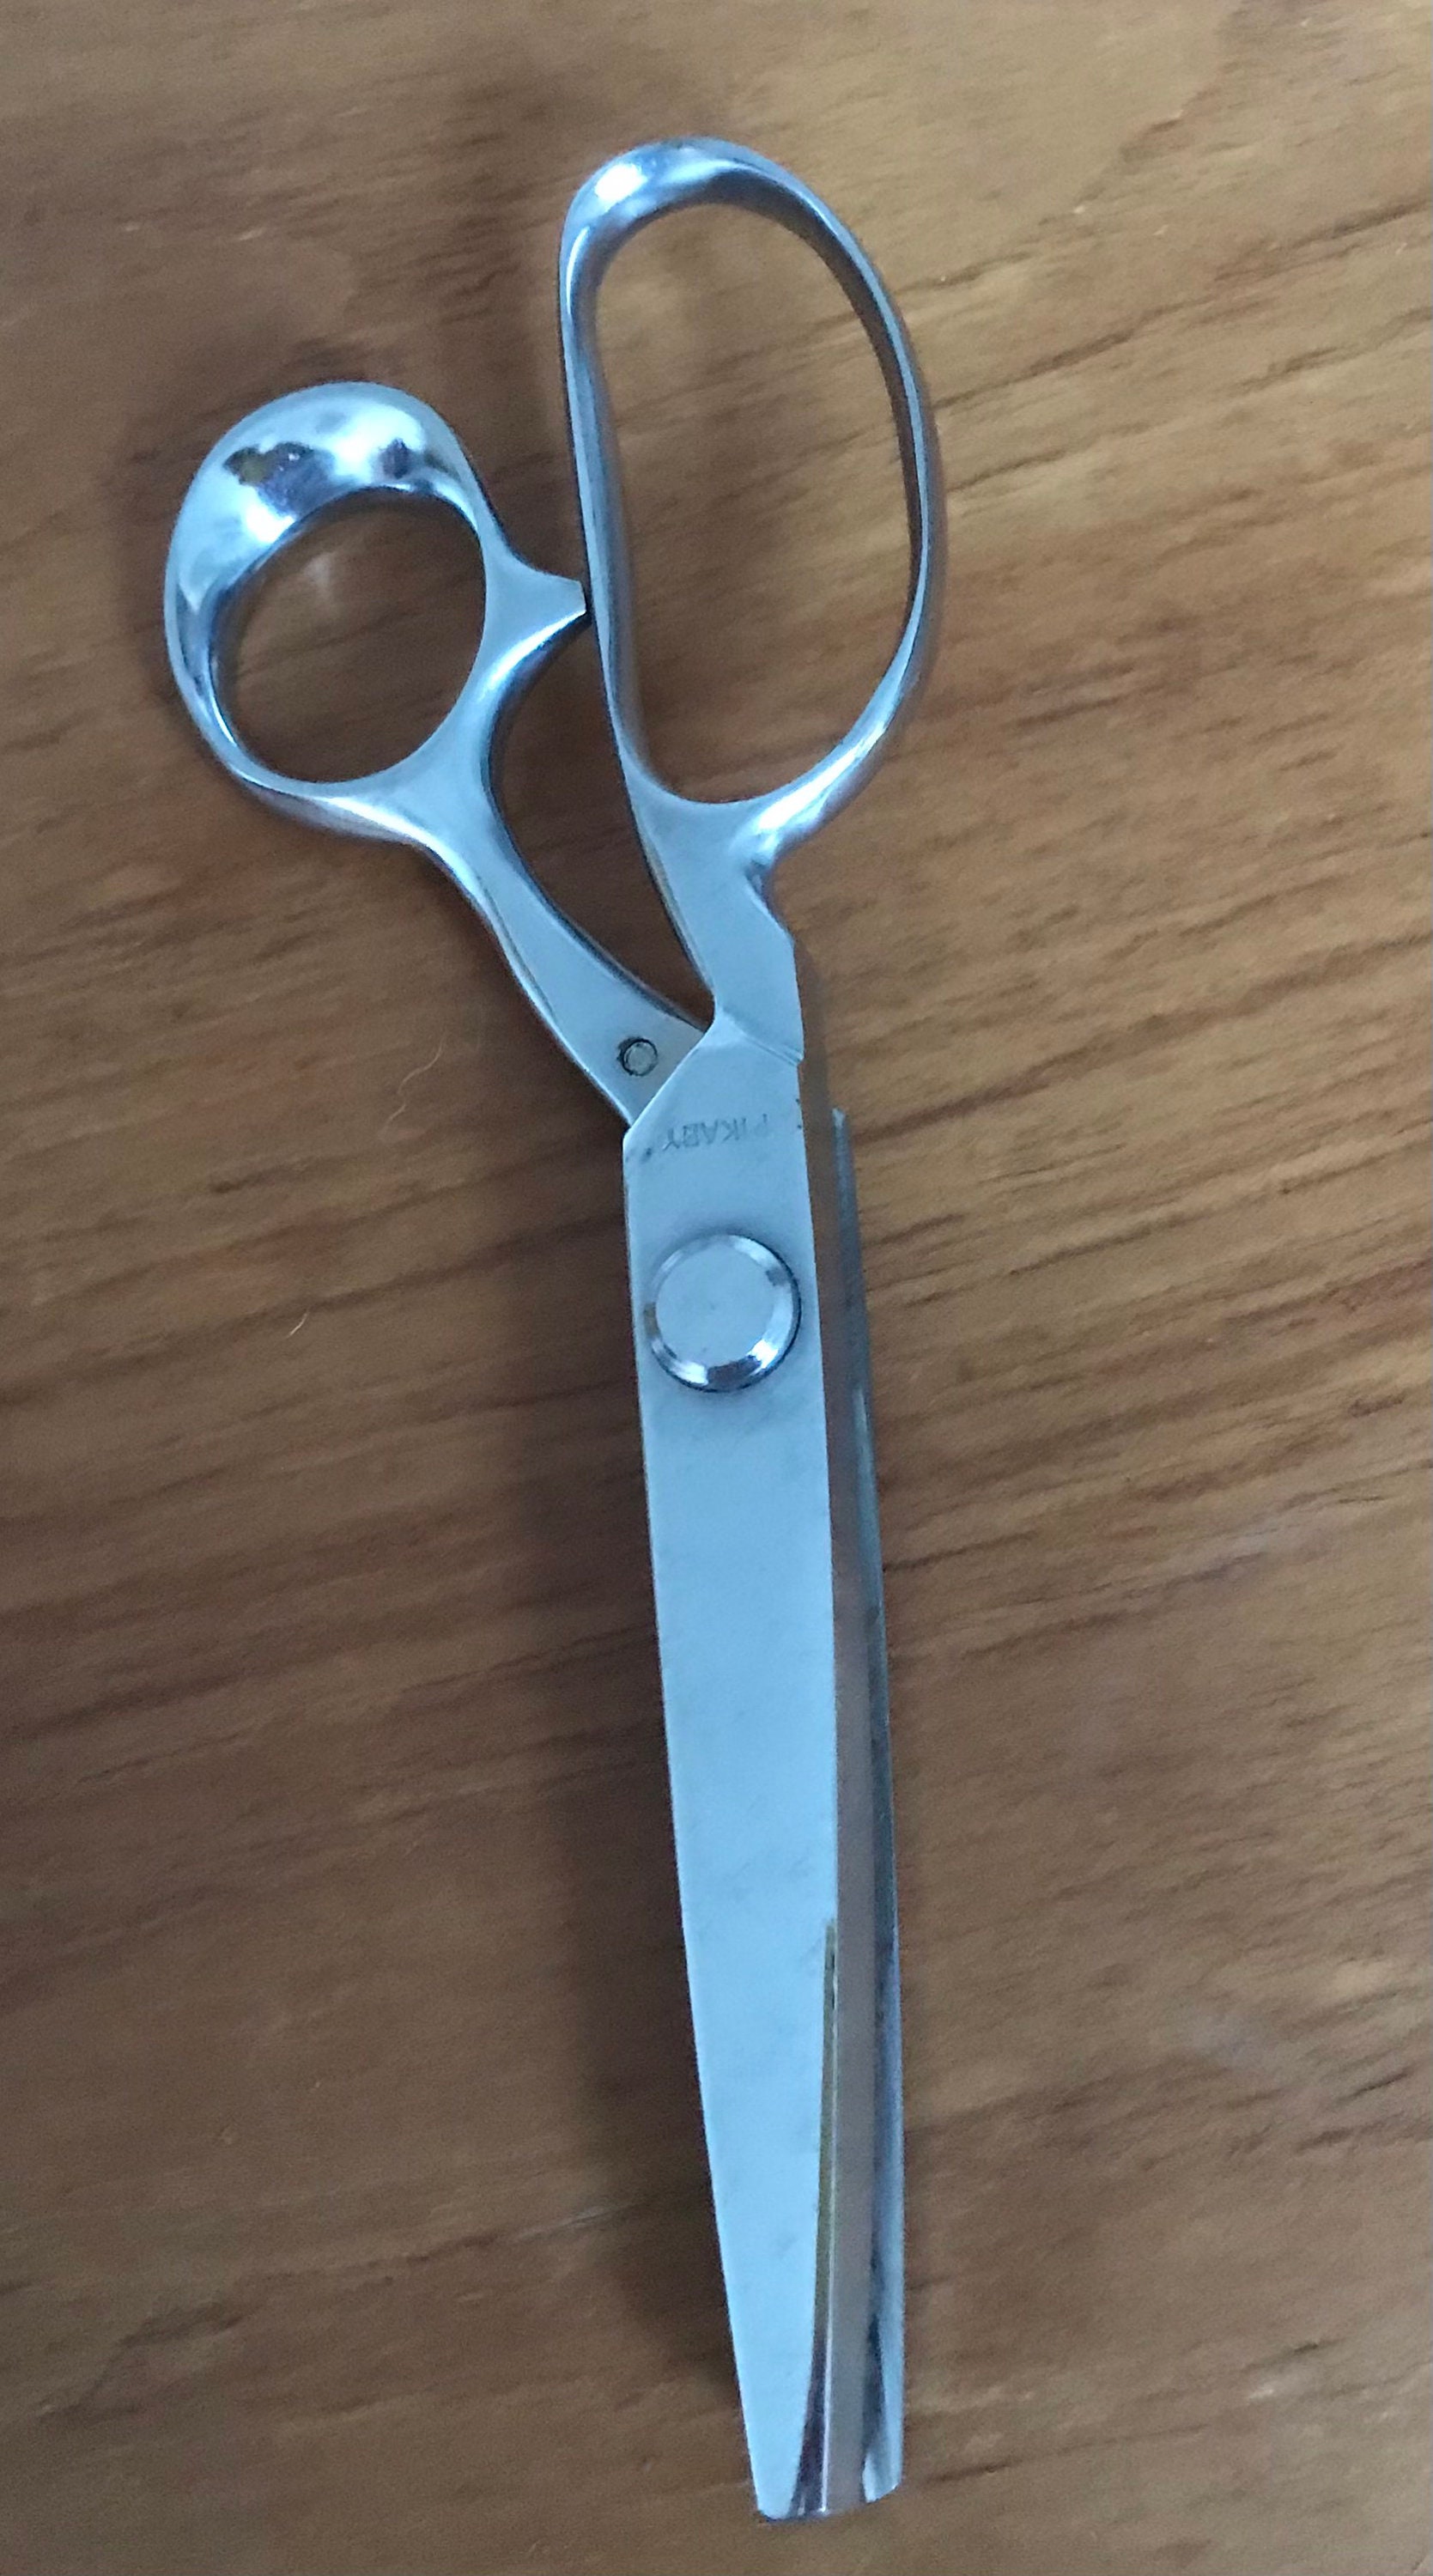 3mm Jagged Scissors Pinking Shears Lace Scissors to Make Repair